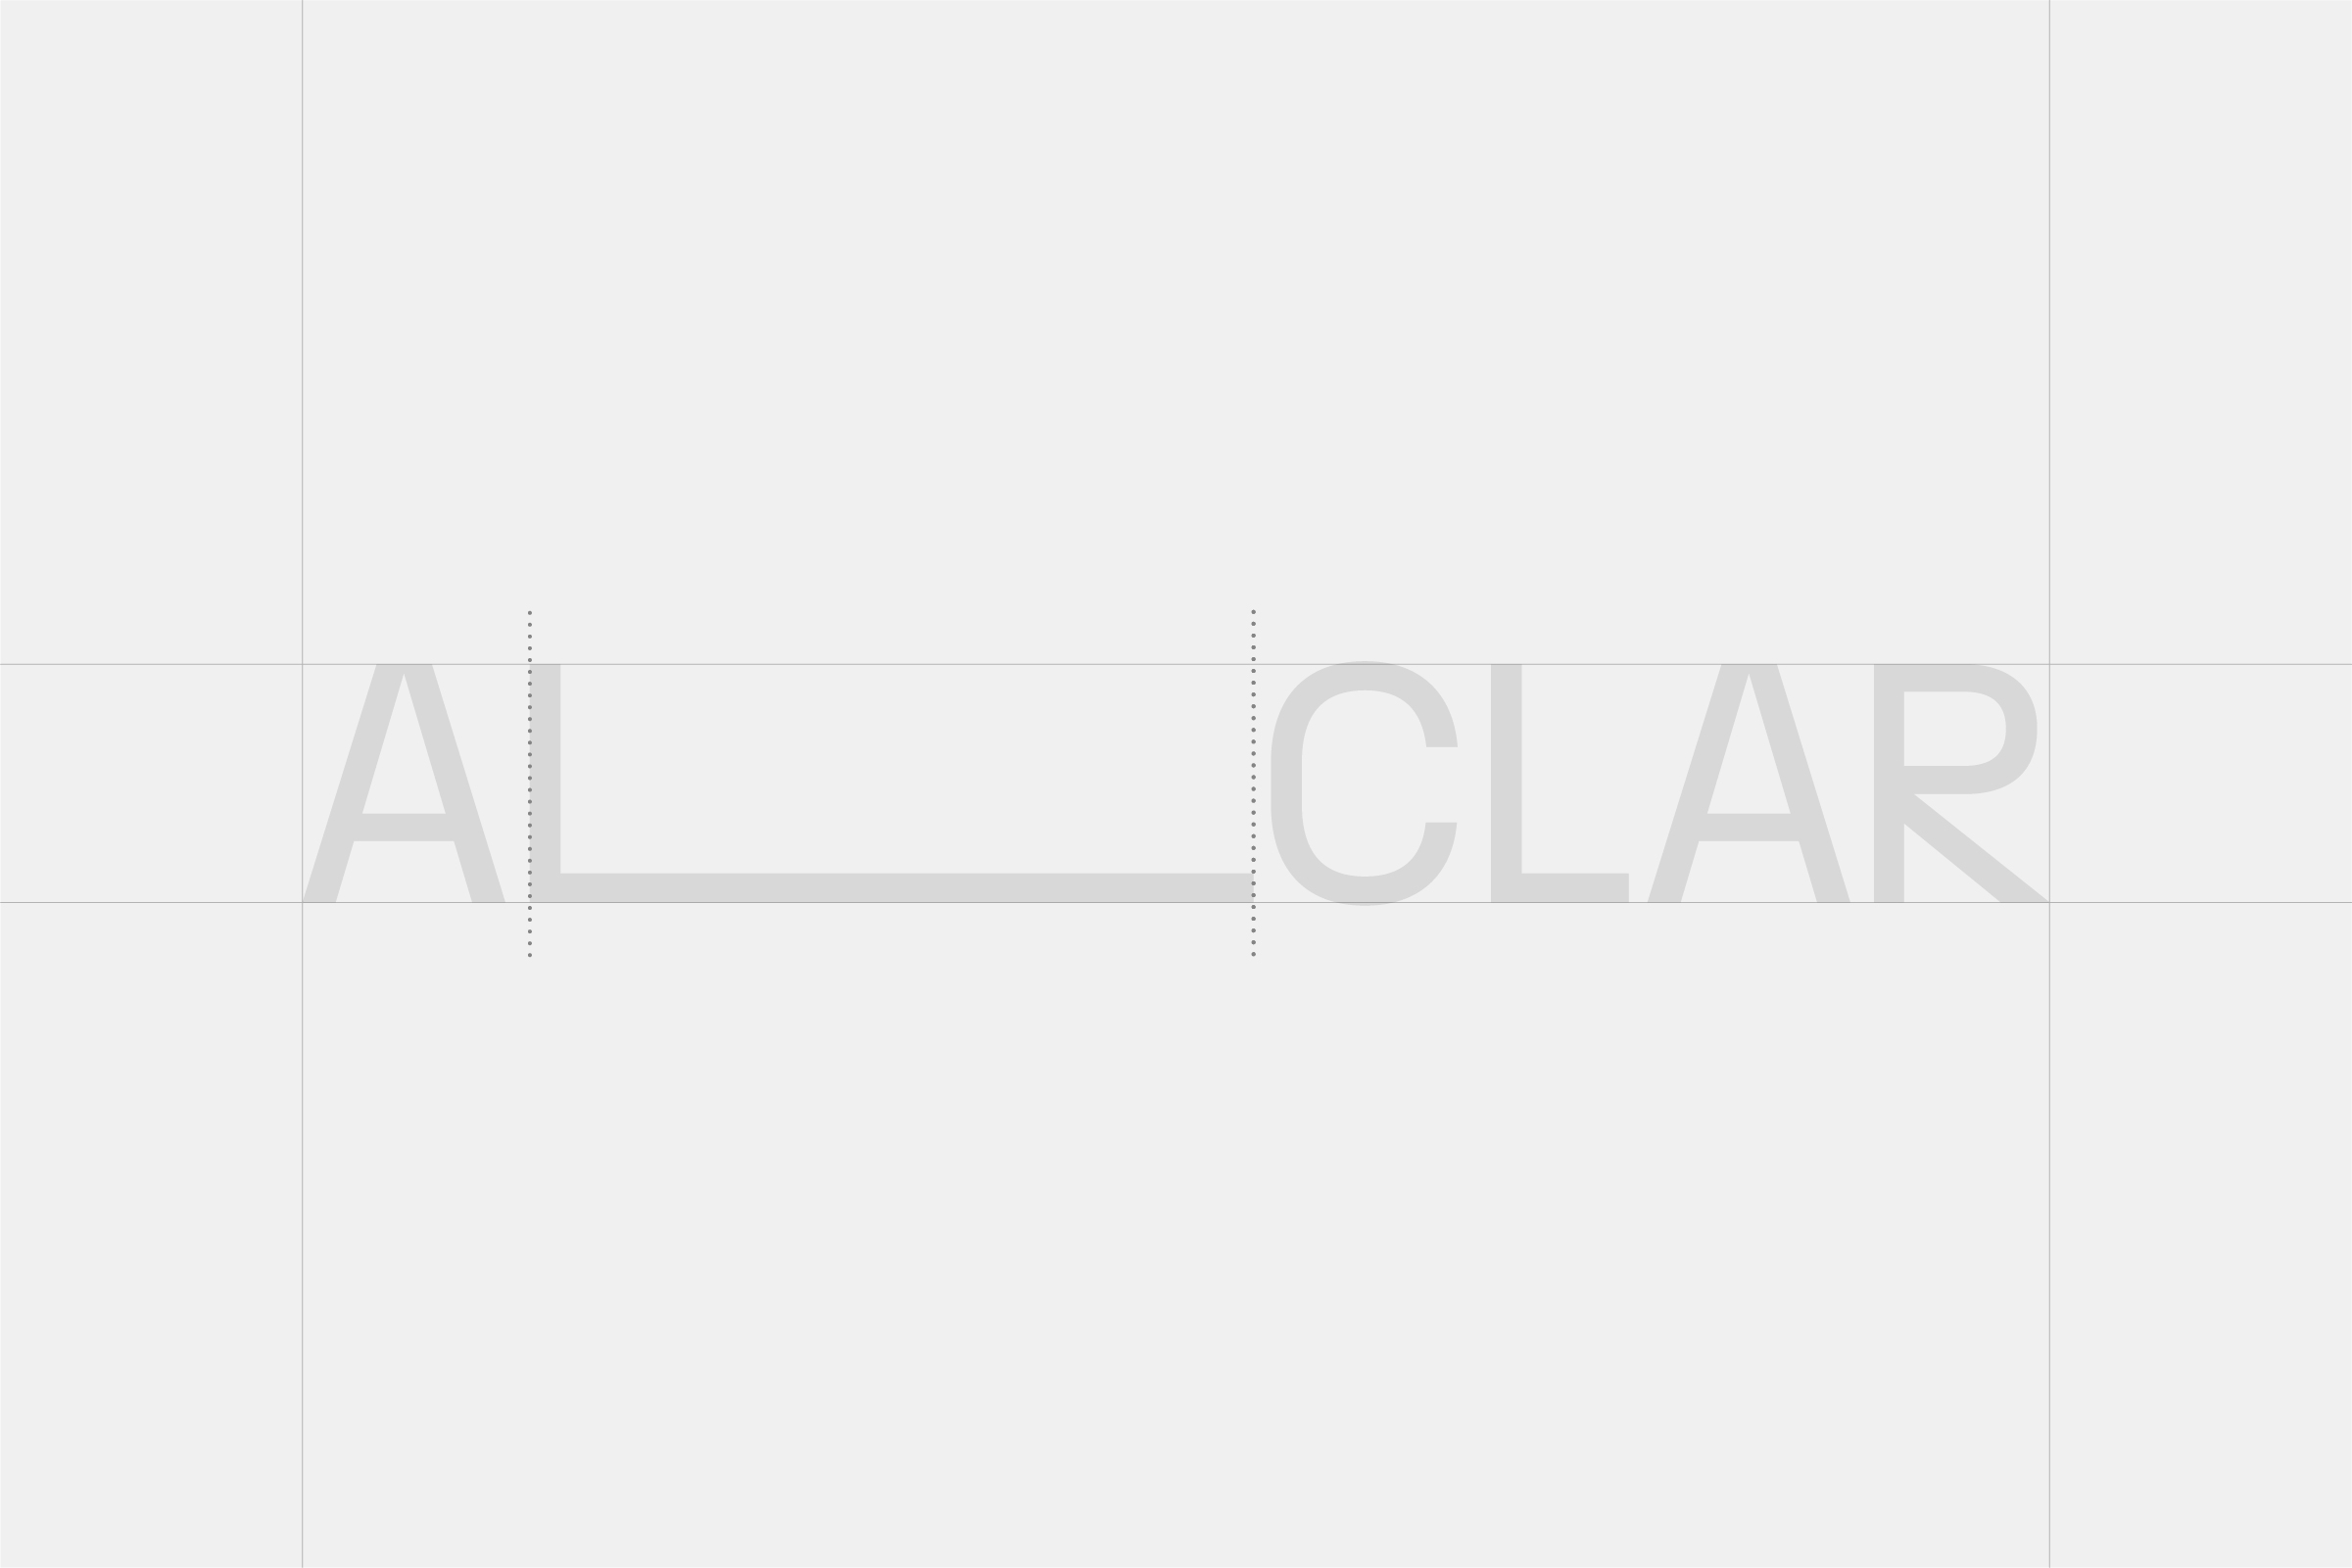 Alclar-Logo-2400x1600px-01-04